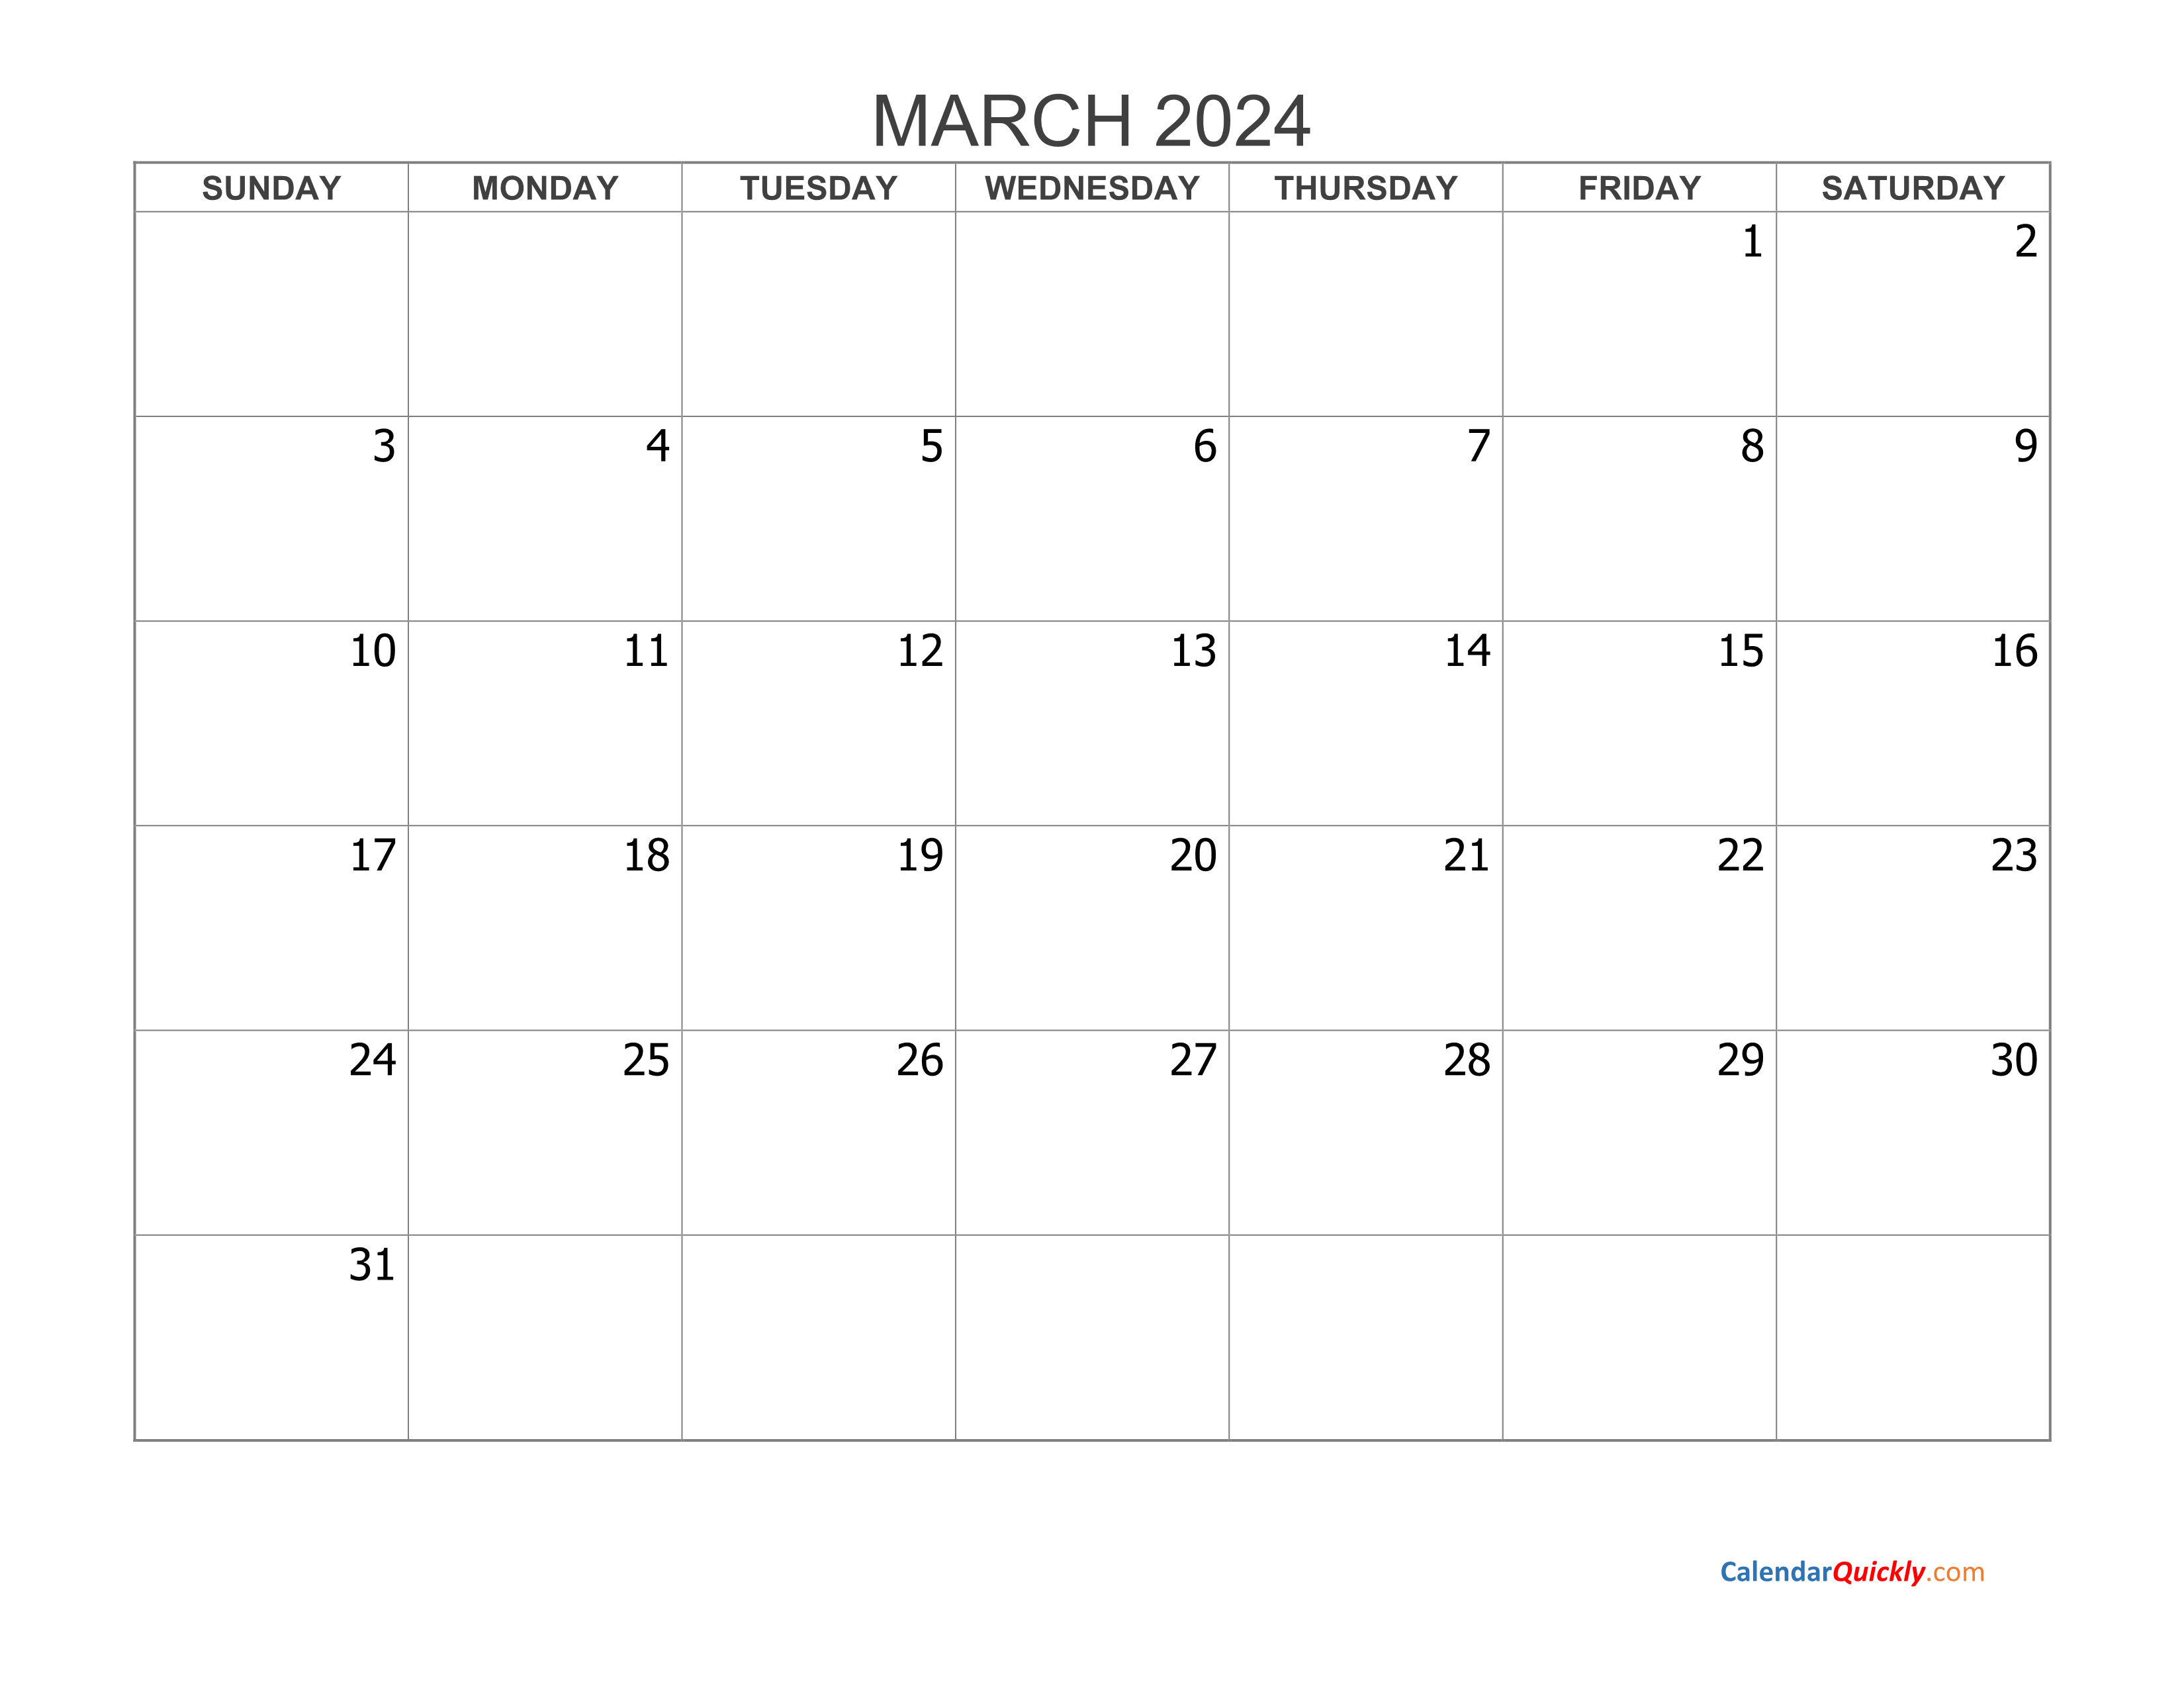 March 2024 Blank Calendar Calendar Quickly - Free Printable Blank Calendar 2024 Printable